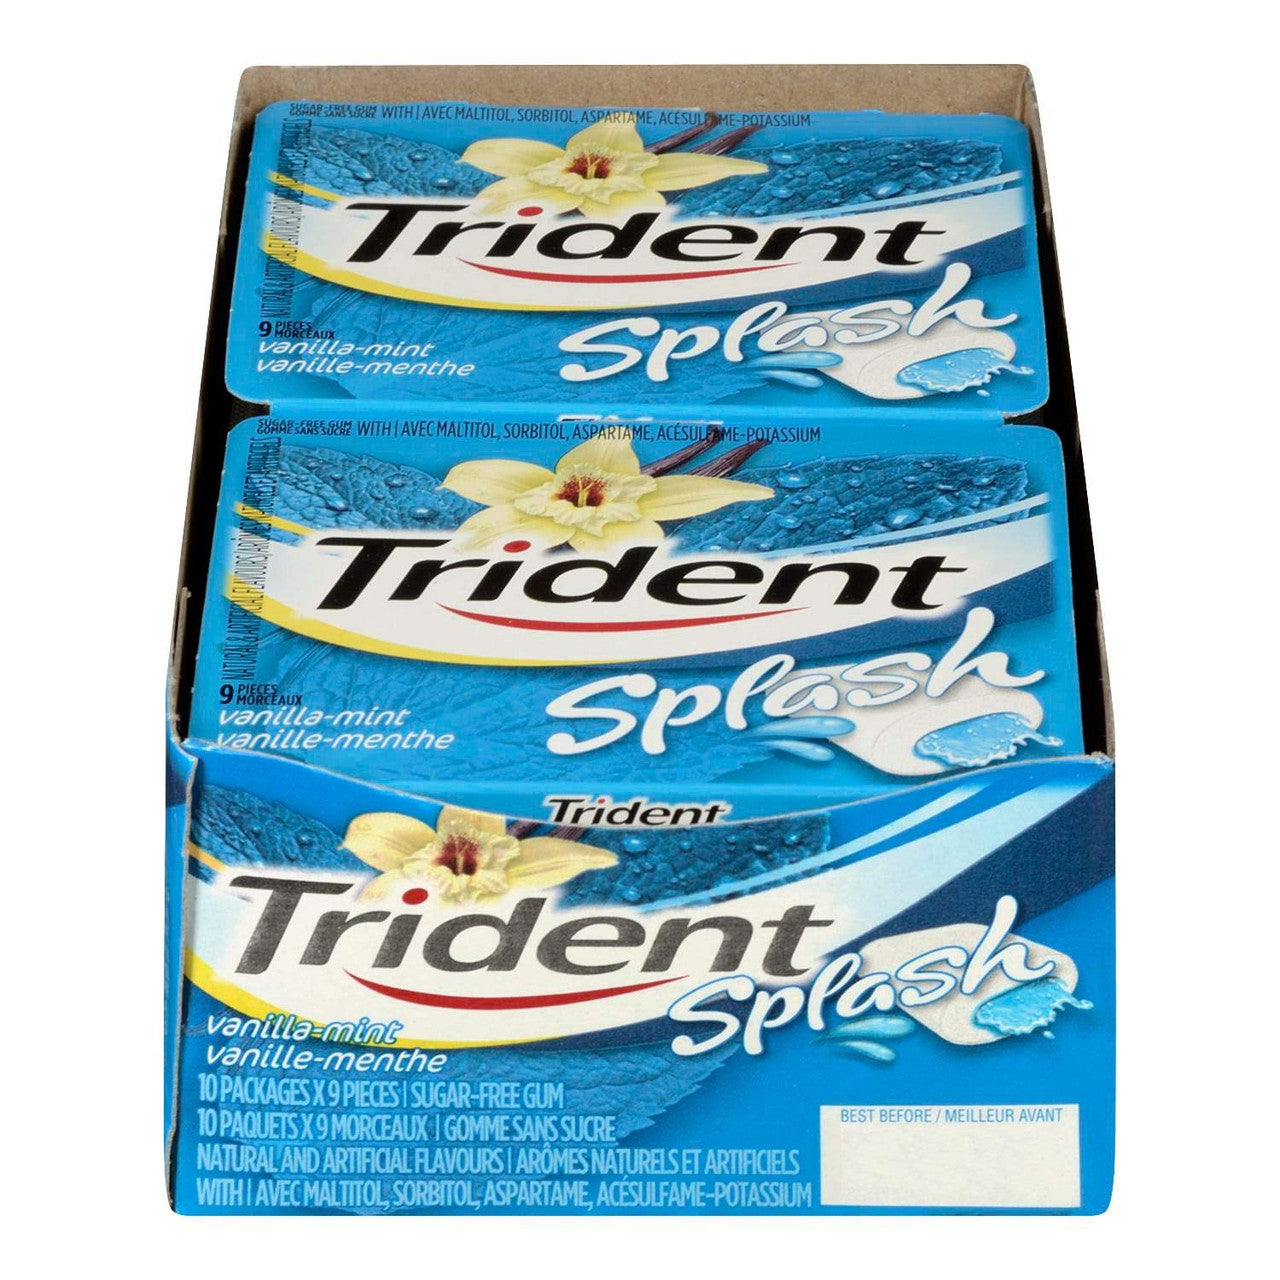 Trident Splash Vanilla Mint Sugar-free Gum - 10x9/90ct {Imported from Canada}